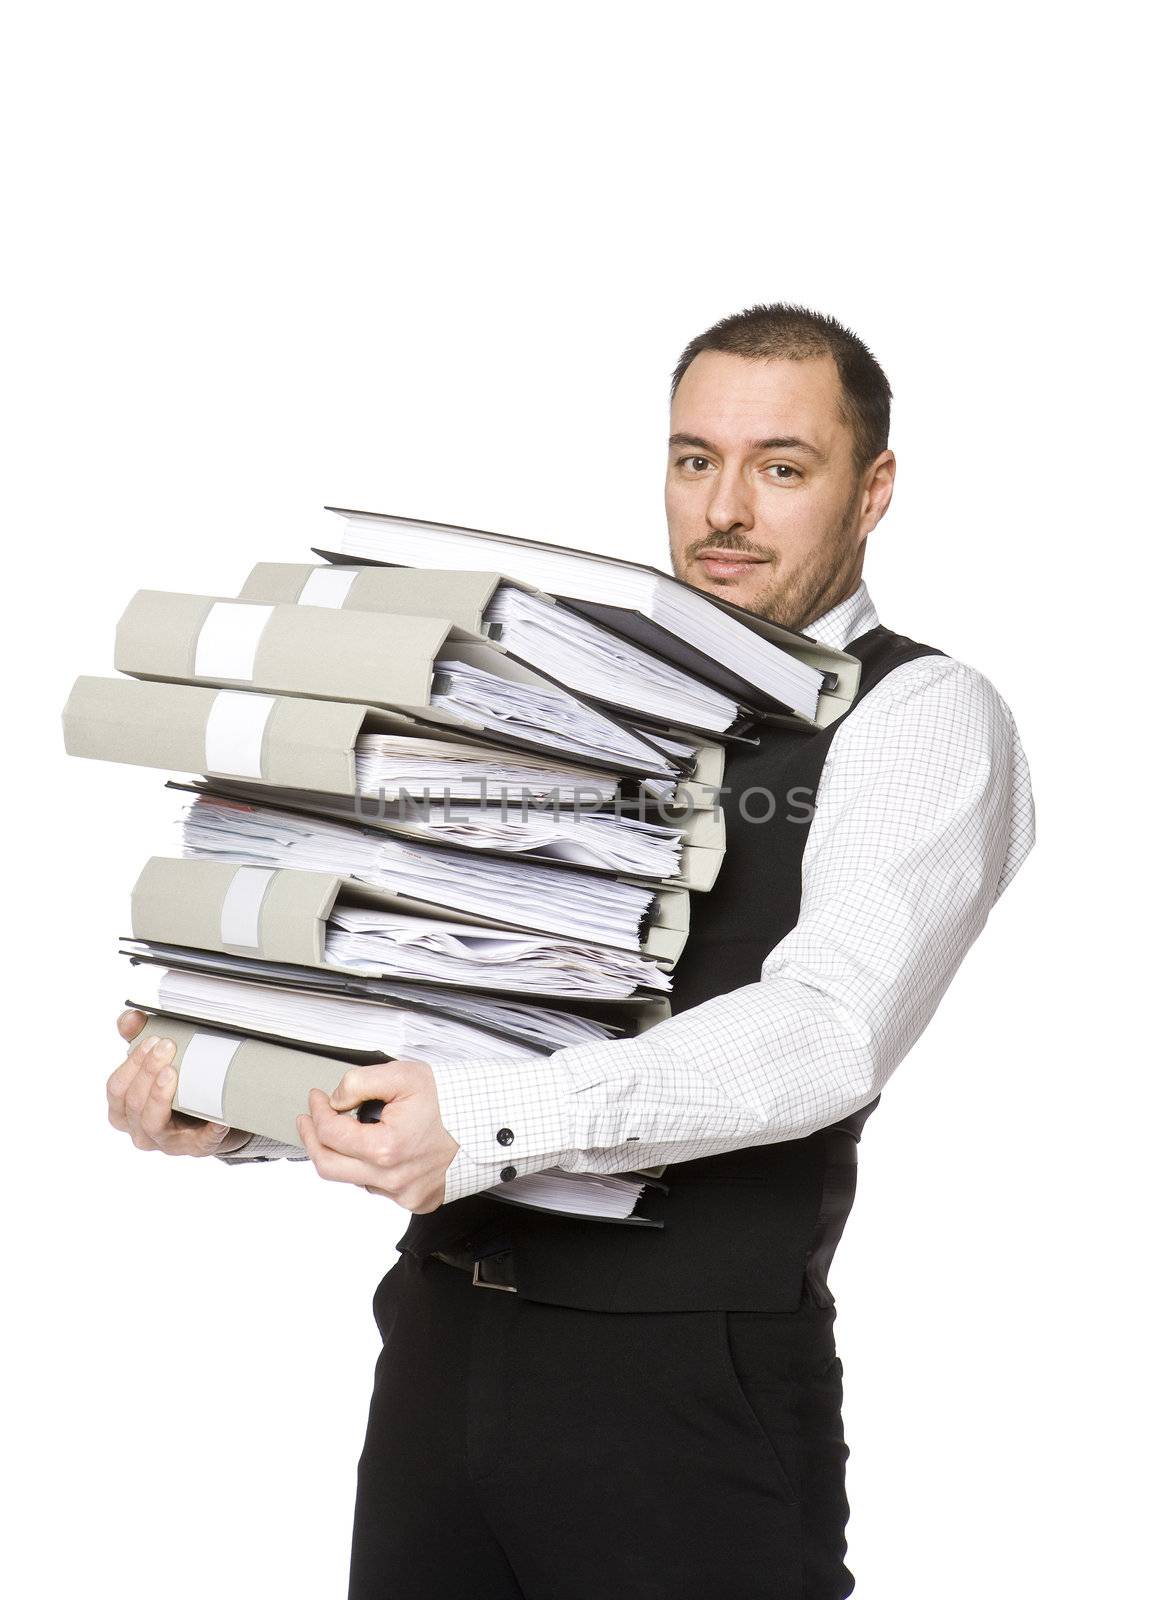 Man carrying a pile of binders by gemenacom